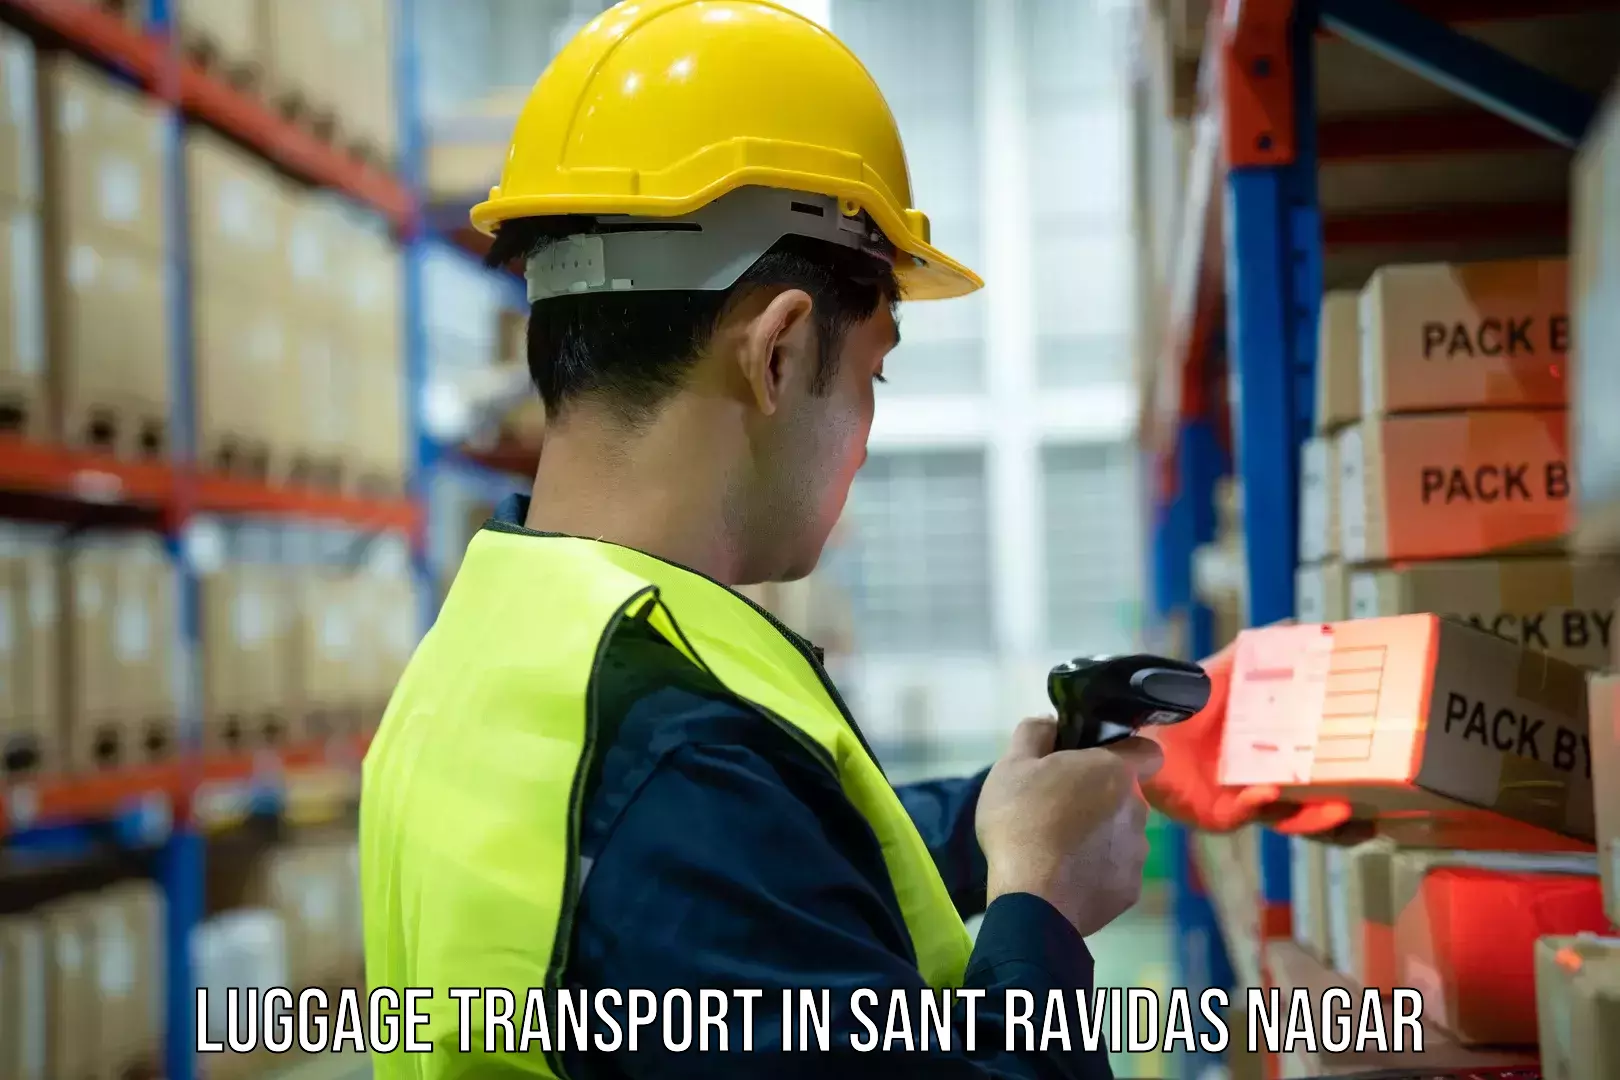 Luggage transport service in Sant Ravidas Nagar